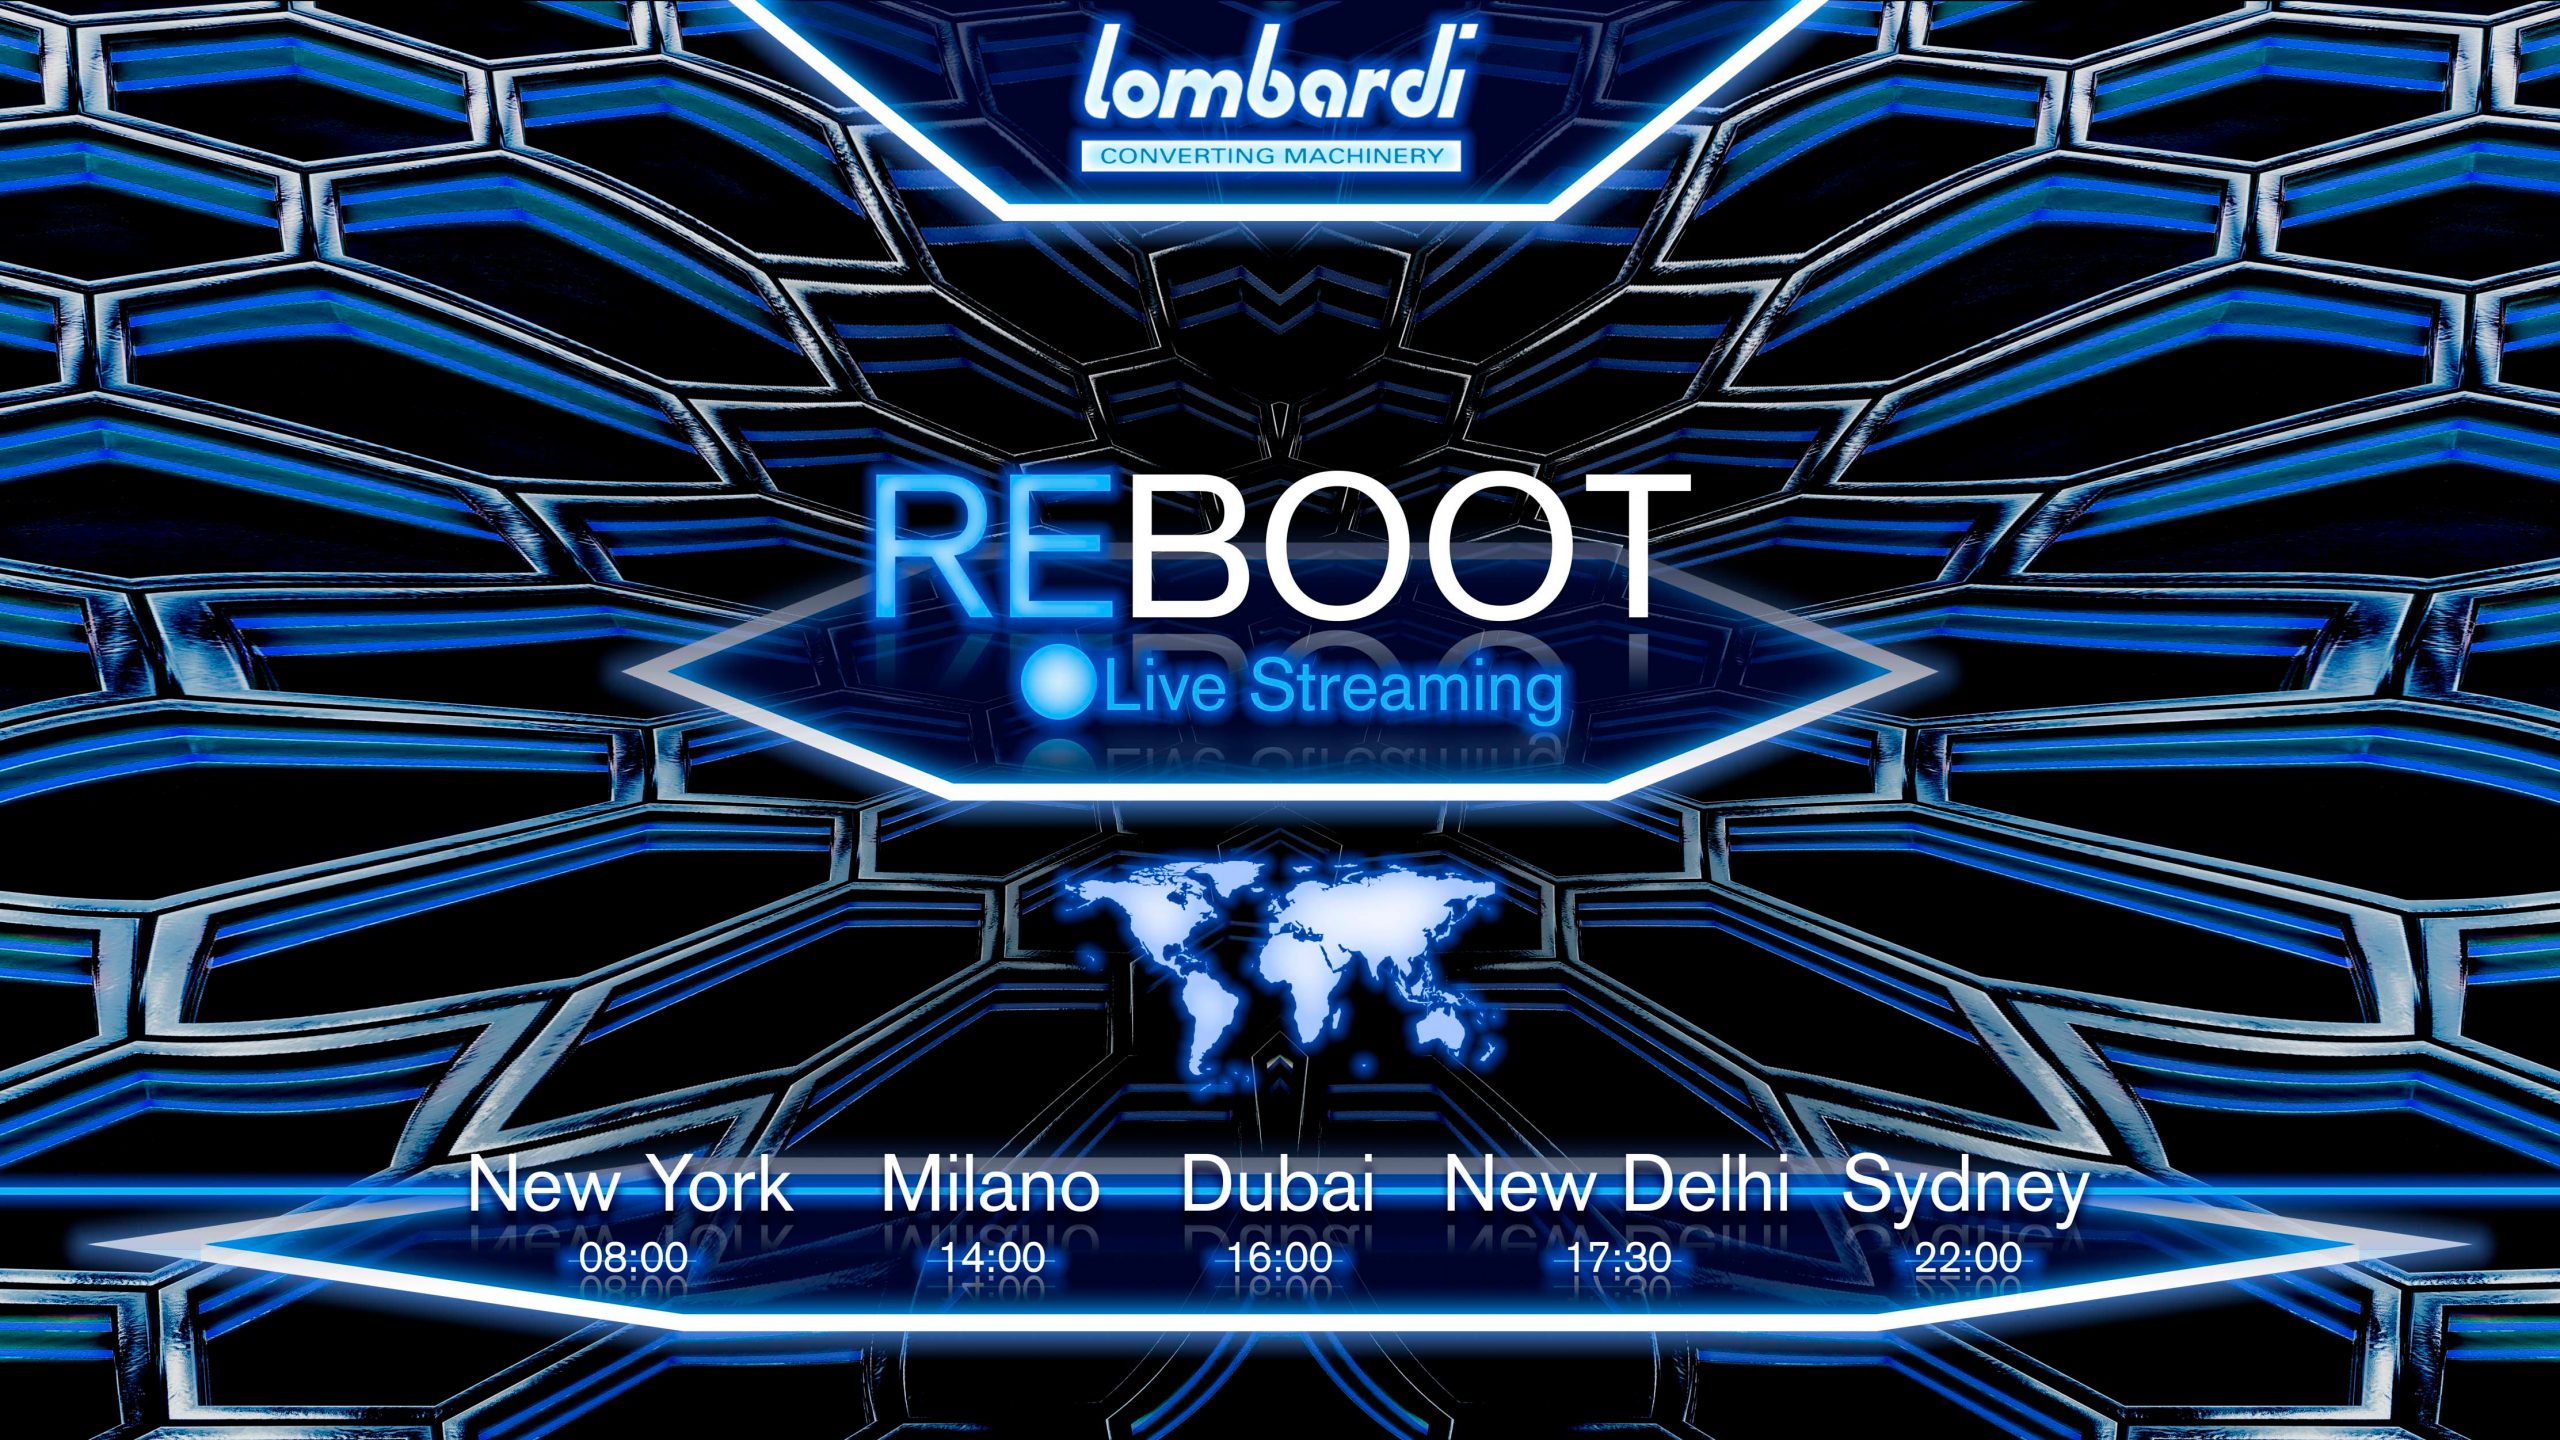 reboot Lombardi